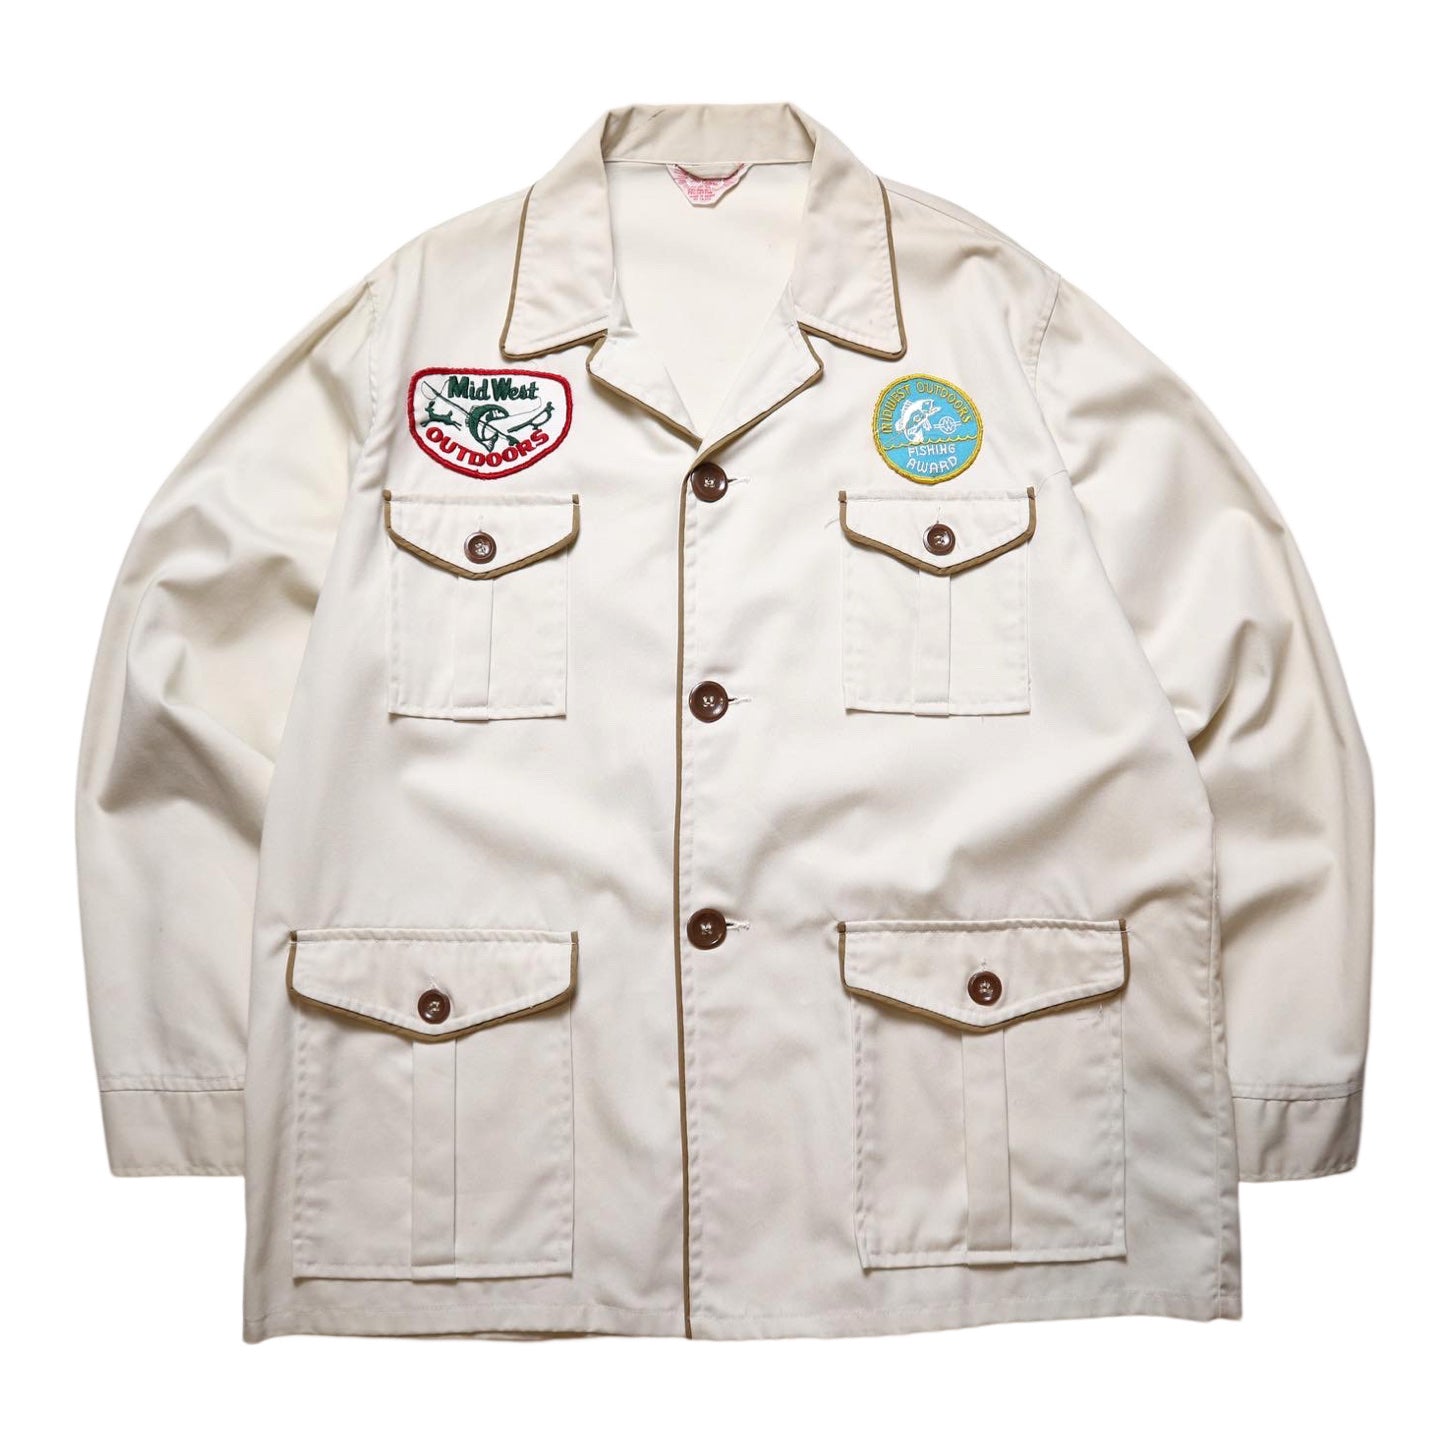 1960s embroidered hunting jacket vintage jacket work jacket